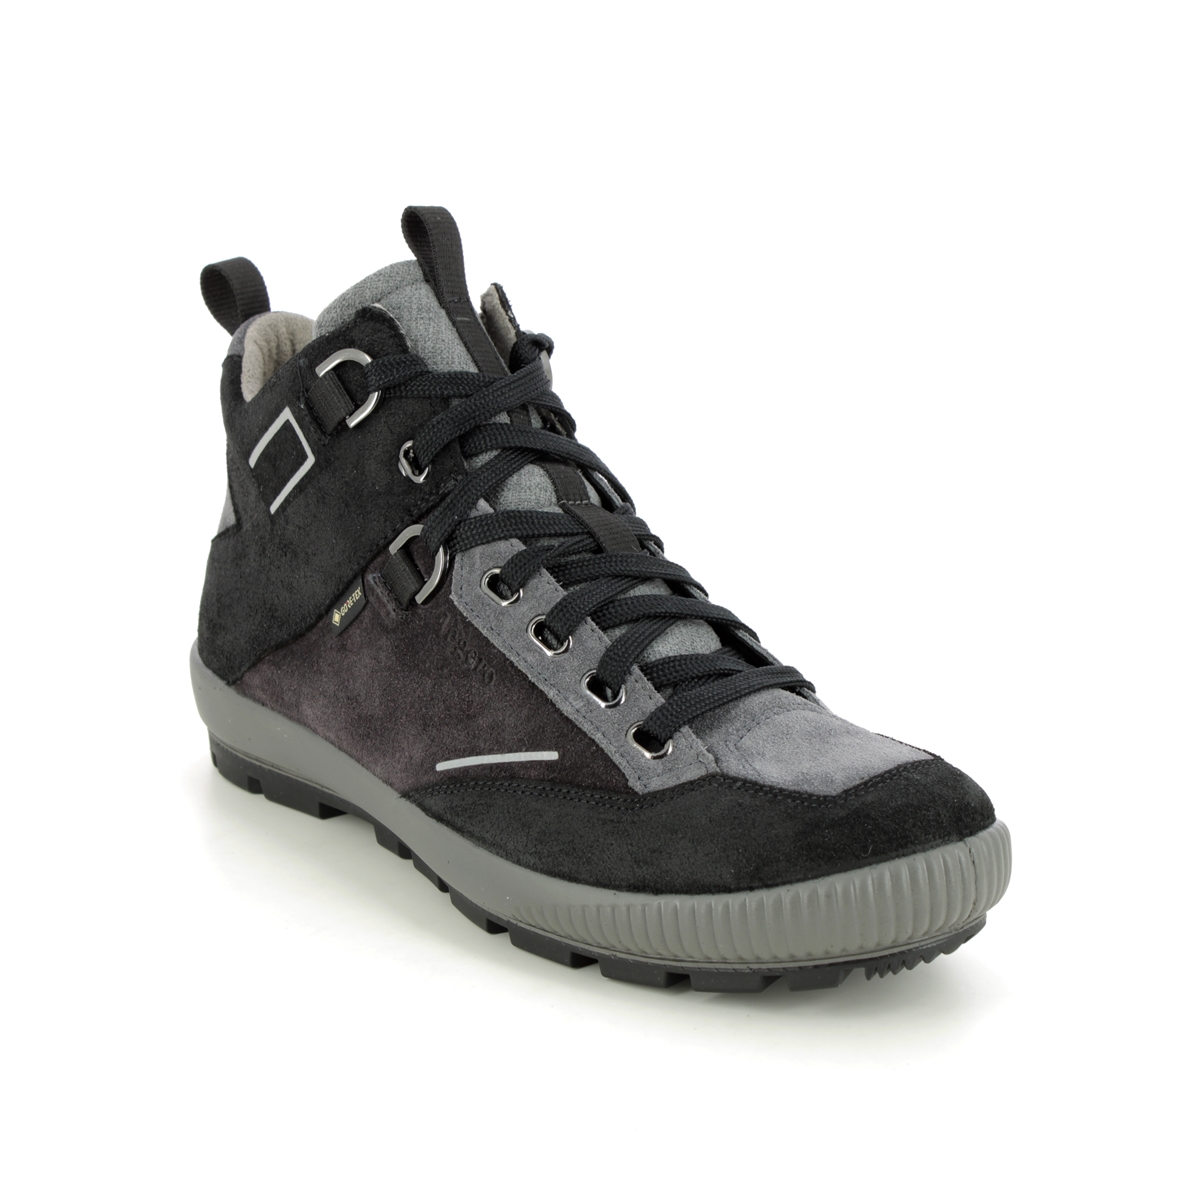 Legero Tanaro Gtx Trek Black Grey Womens Walking Boots 2000125-0000 In Size 6 In Plain Black Grey